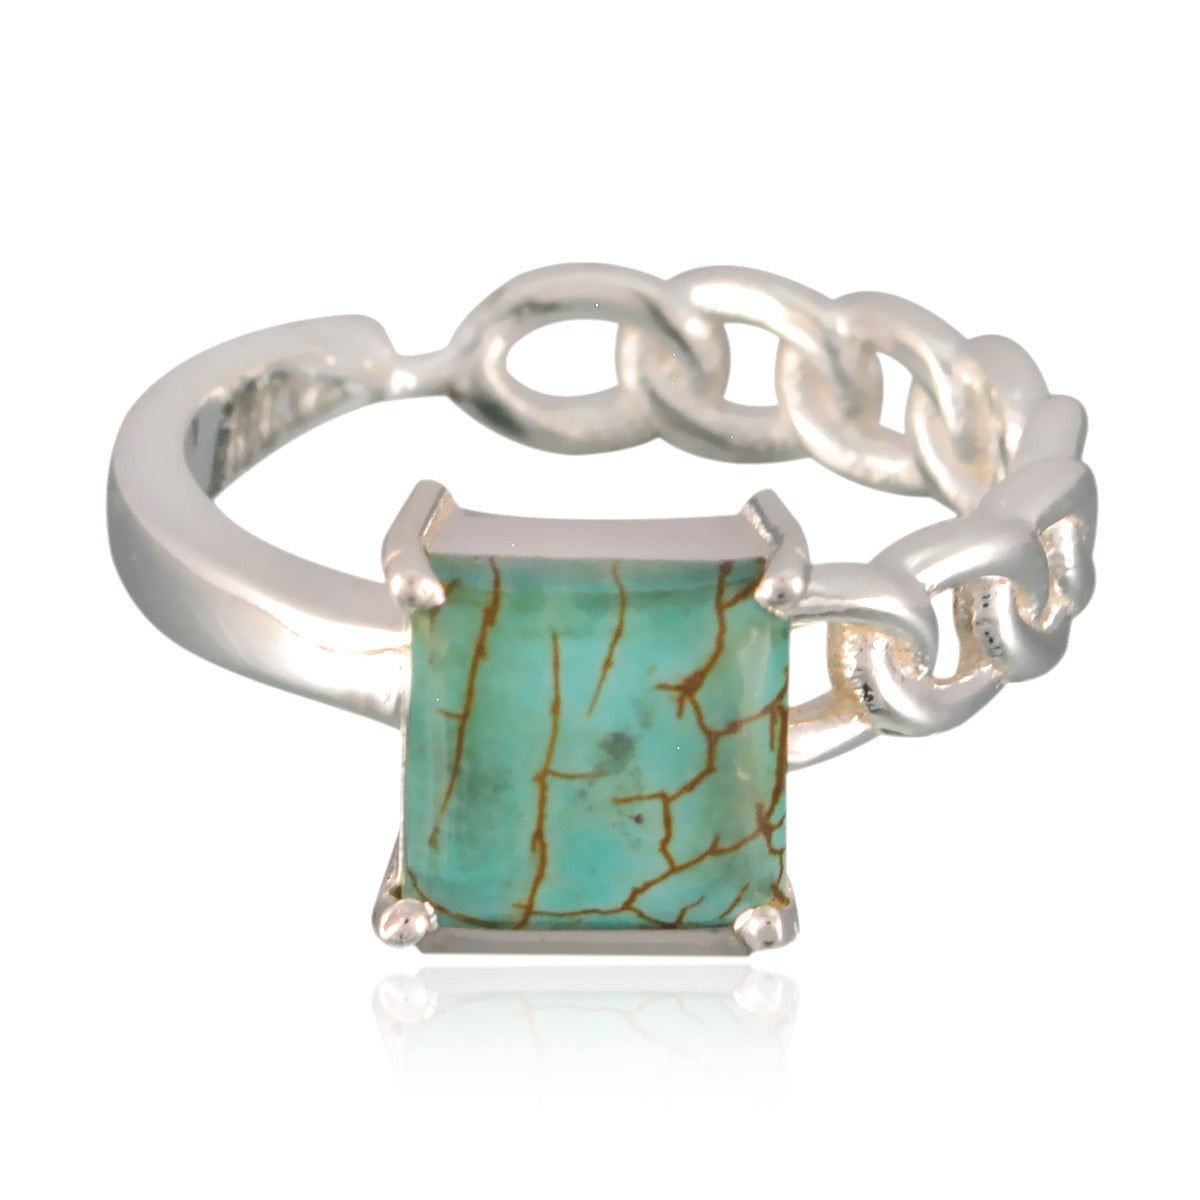 Riyo encantadora piedra preciosa turquesa anillo de plata 925 joyería popular